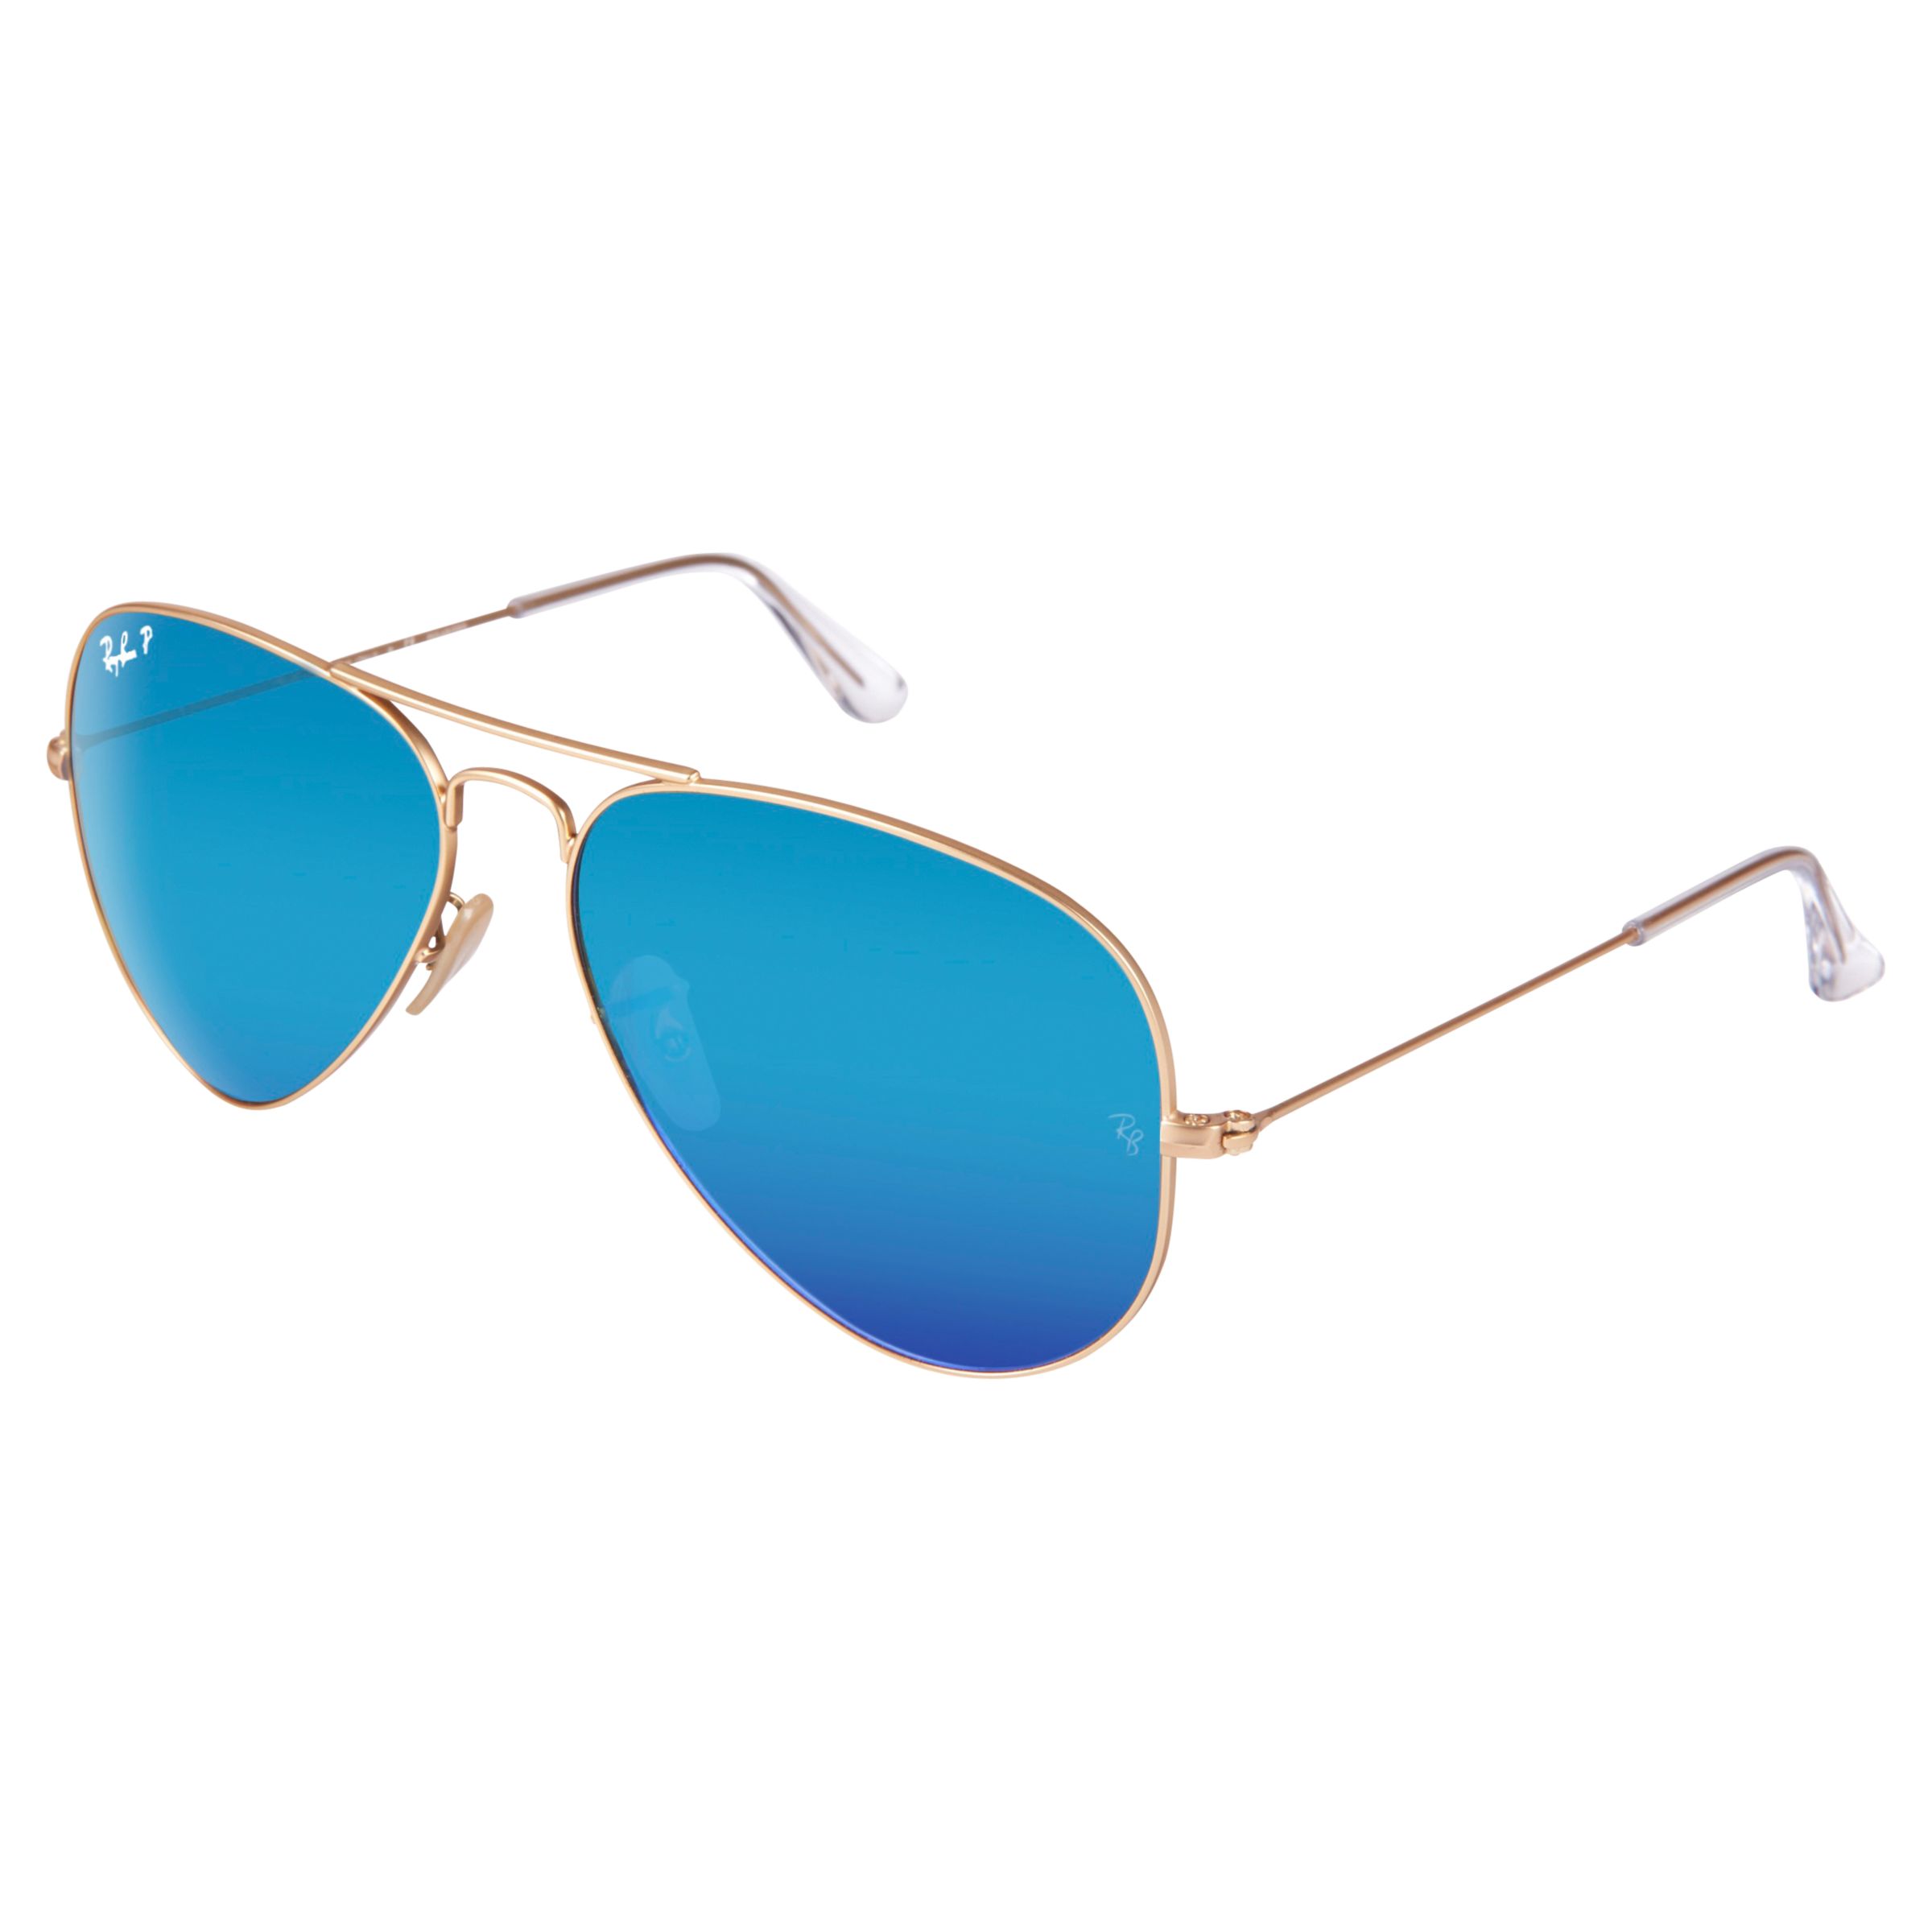 Ray-Ban RB3025 Original Aviator Sunglasses, Blue at John Lewis & Partners